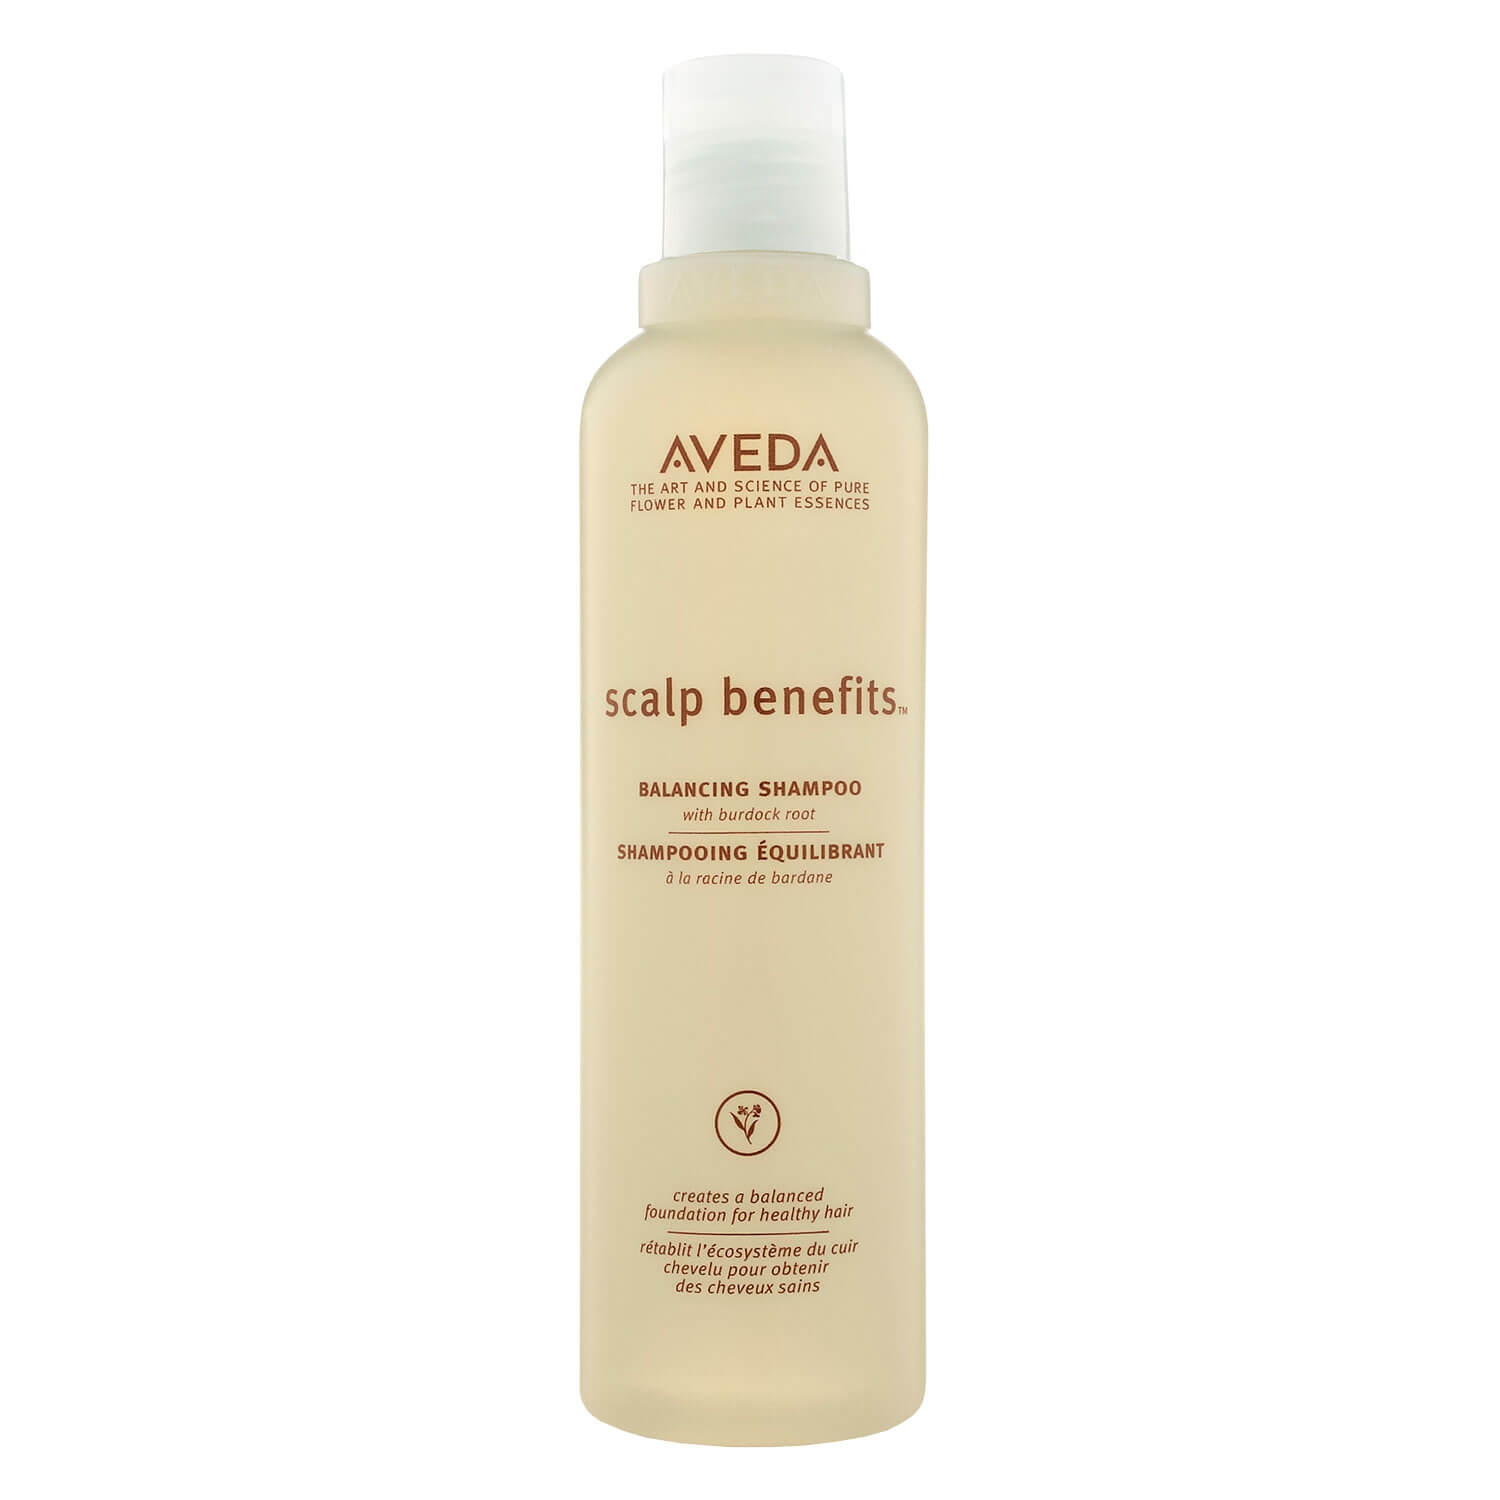 Product image from scalp benefits - balancing shampoo